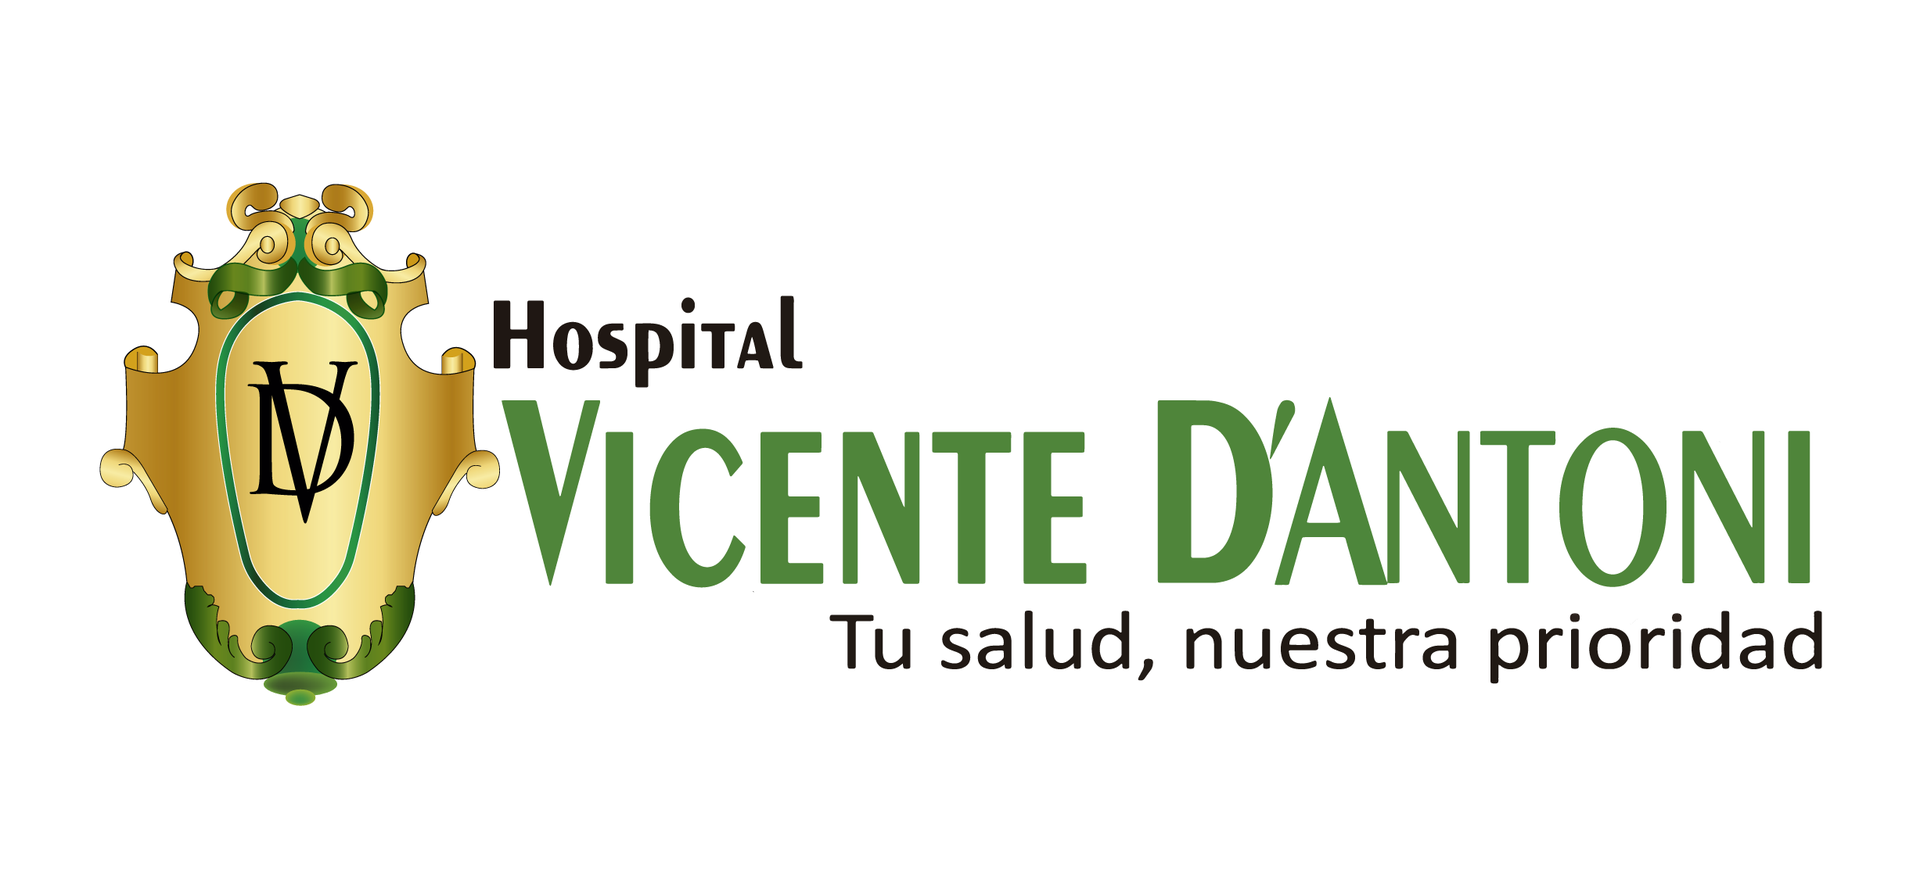 Hospital Vidente D'Antoni